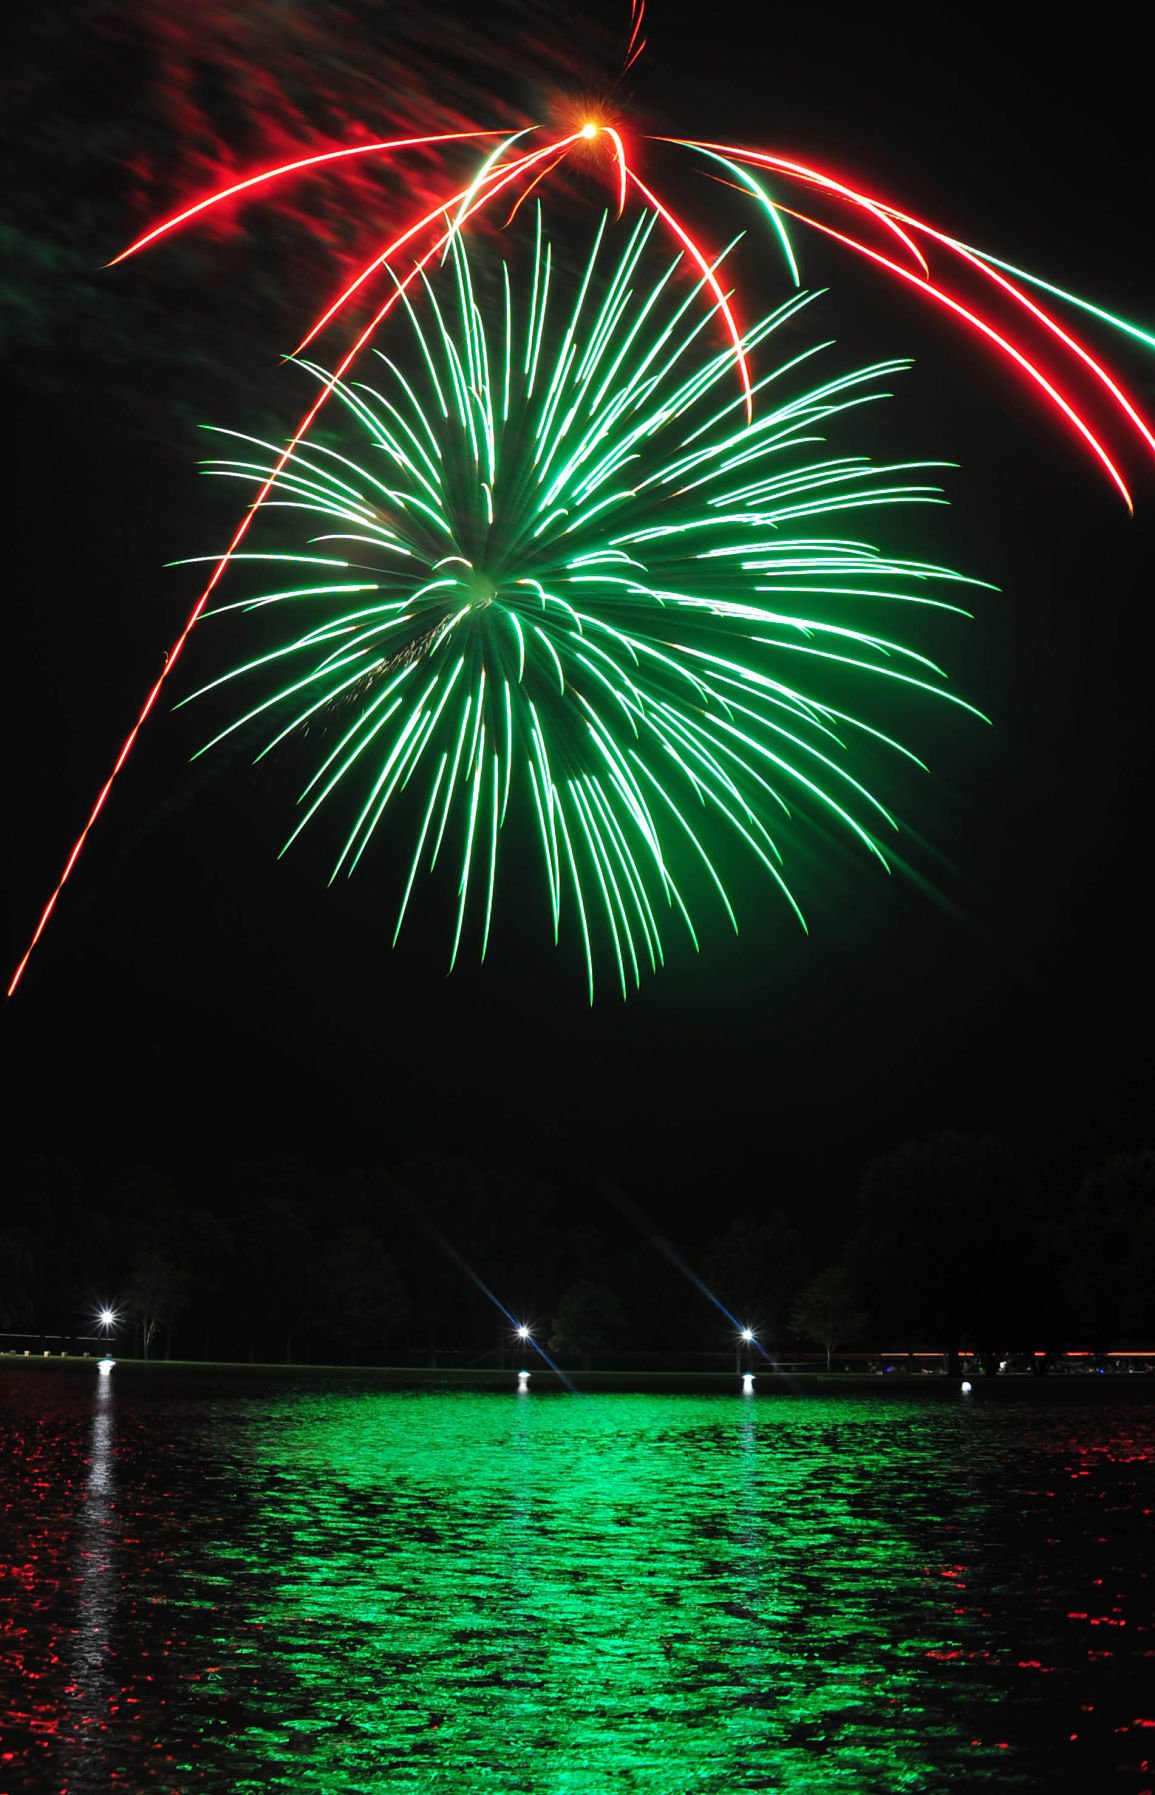 Oxford Fireworks Display Sunday Night At Oxford Lake Slideshows